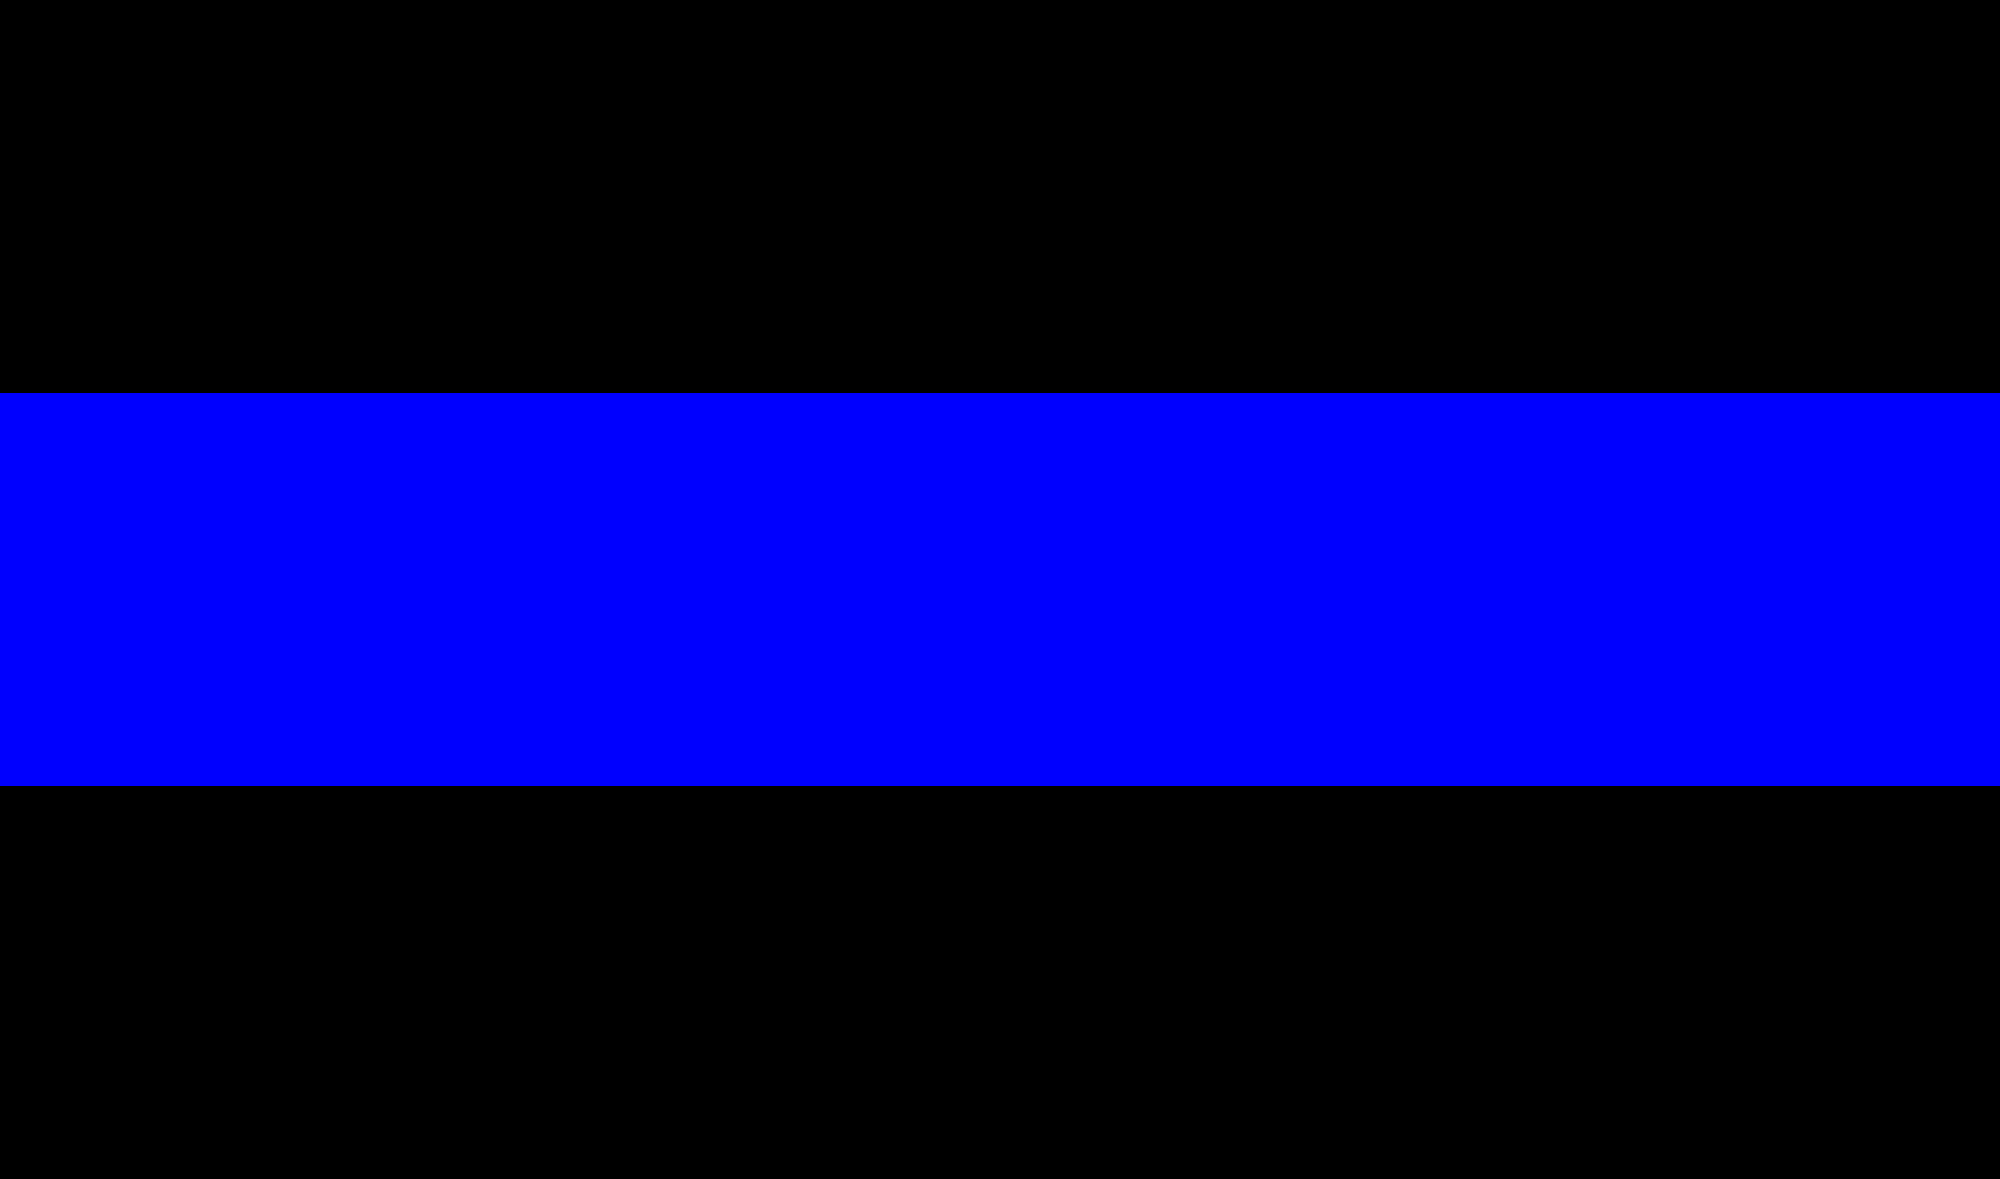 black flag with blue stripe